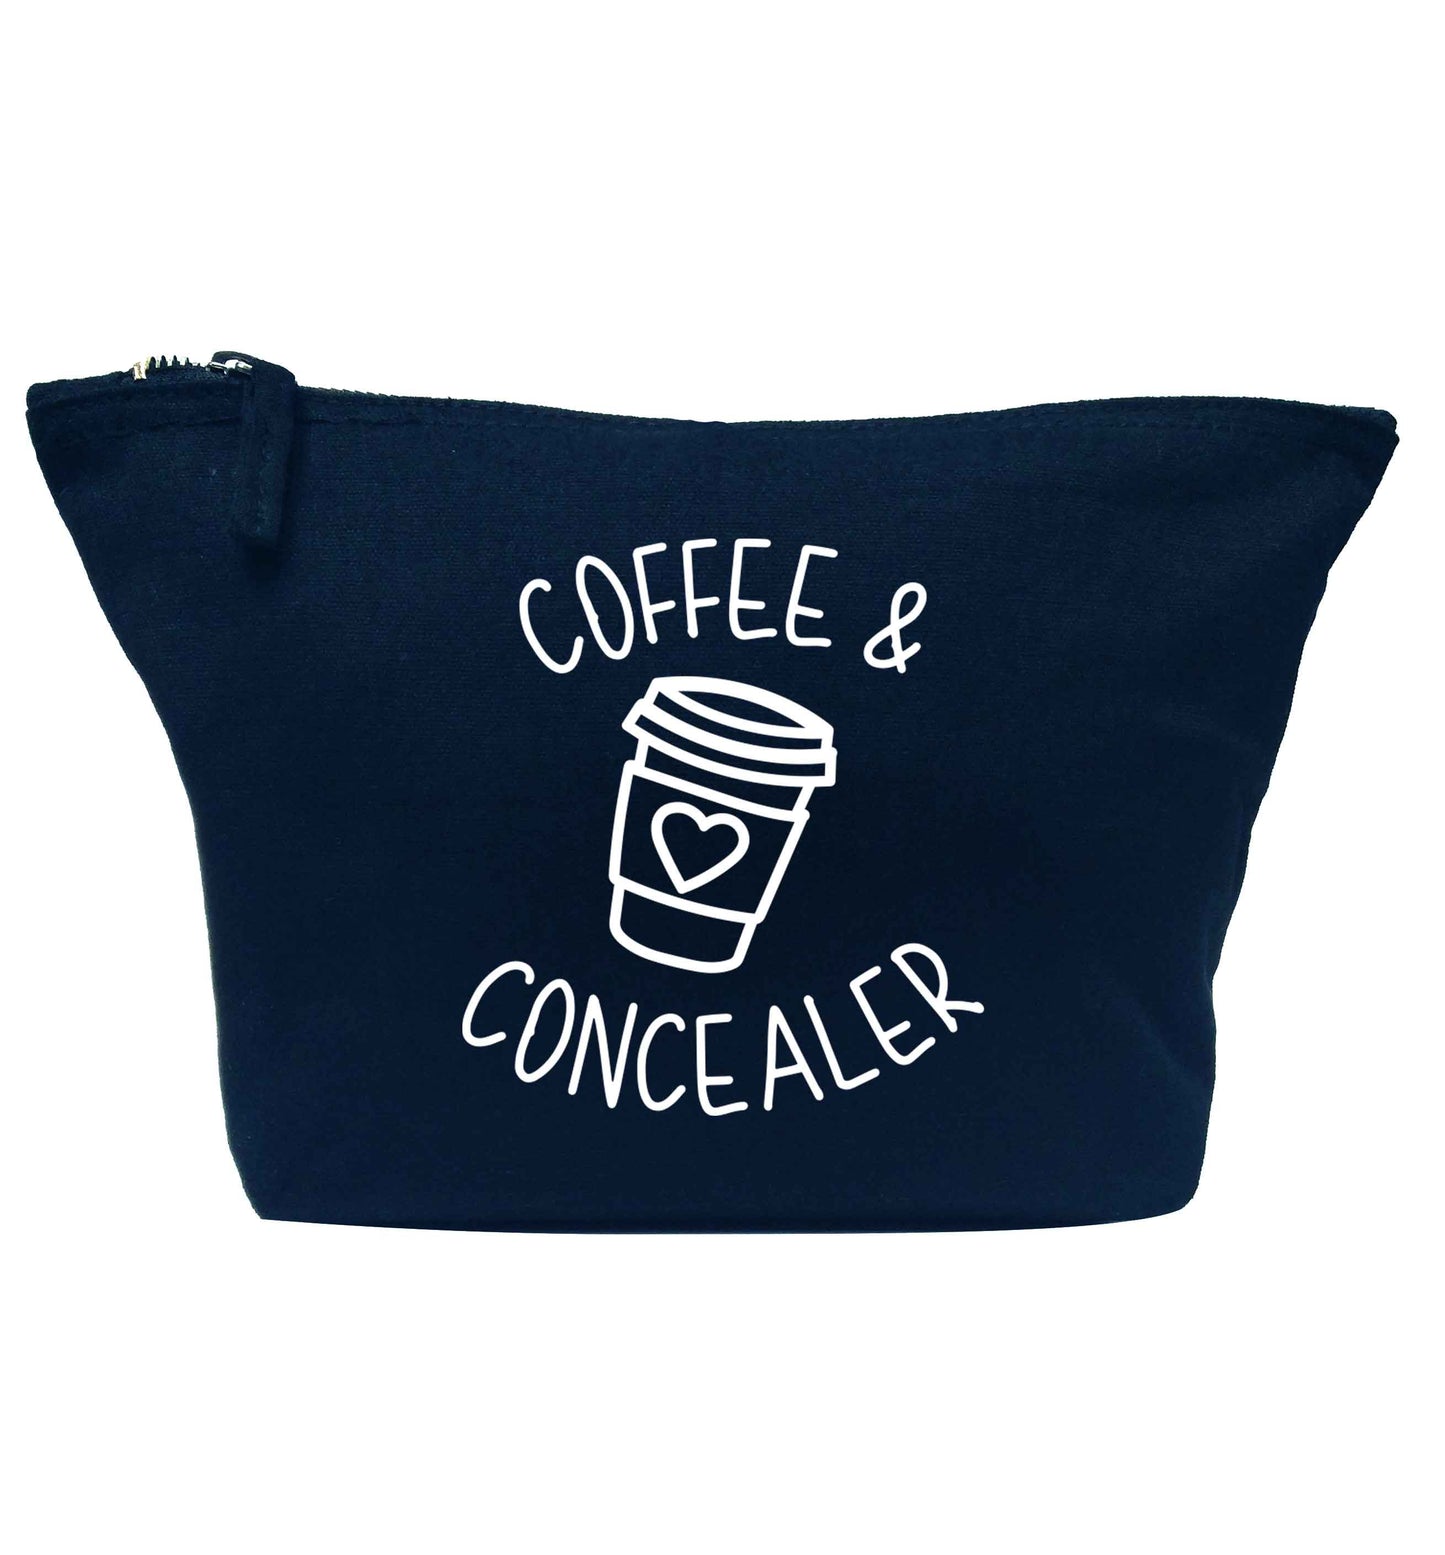 Coffee and concealer navy makeup bag